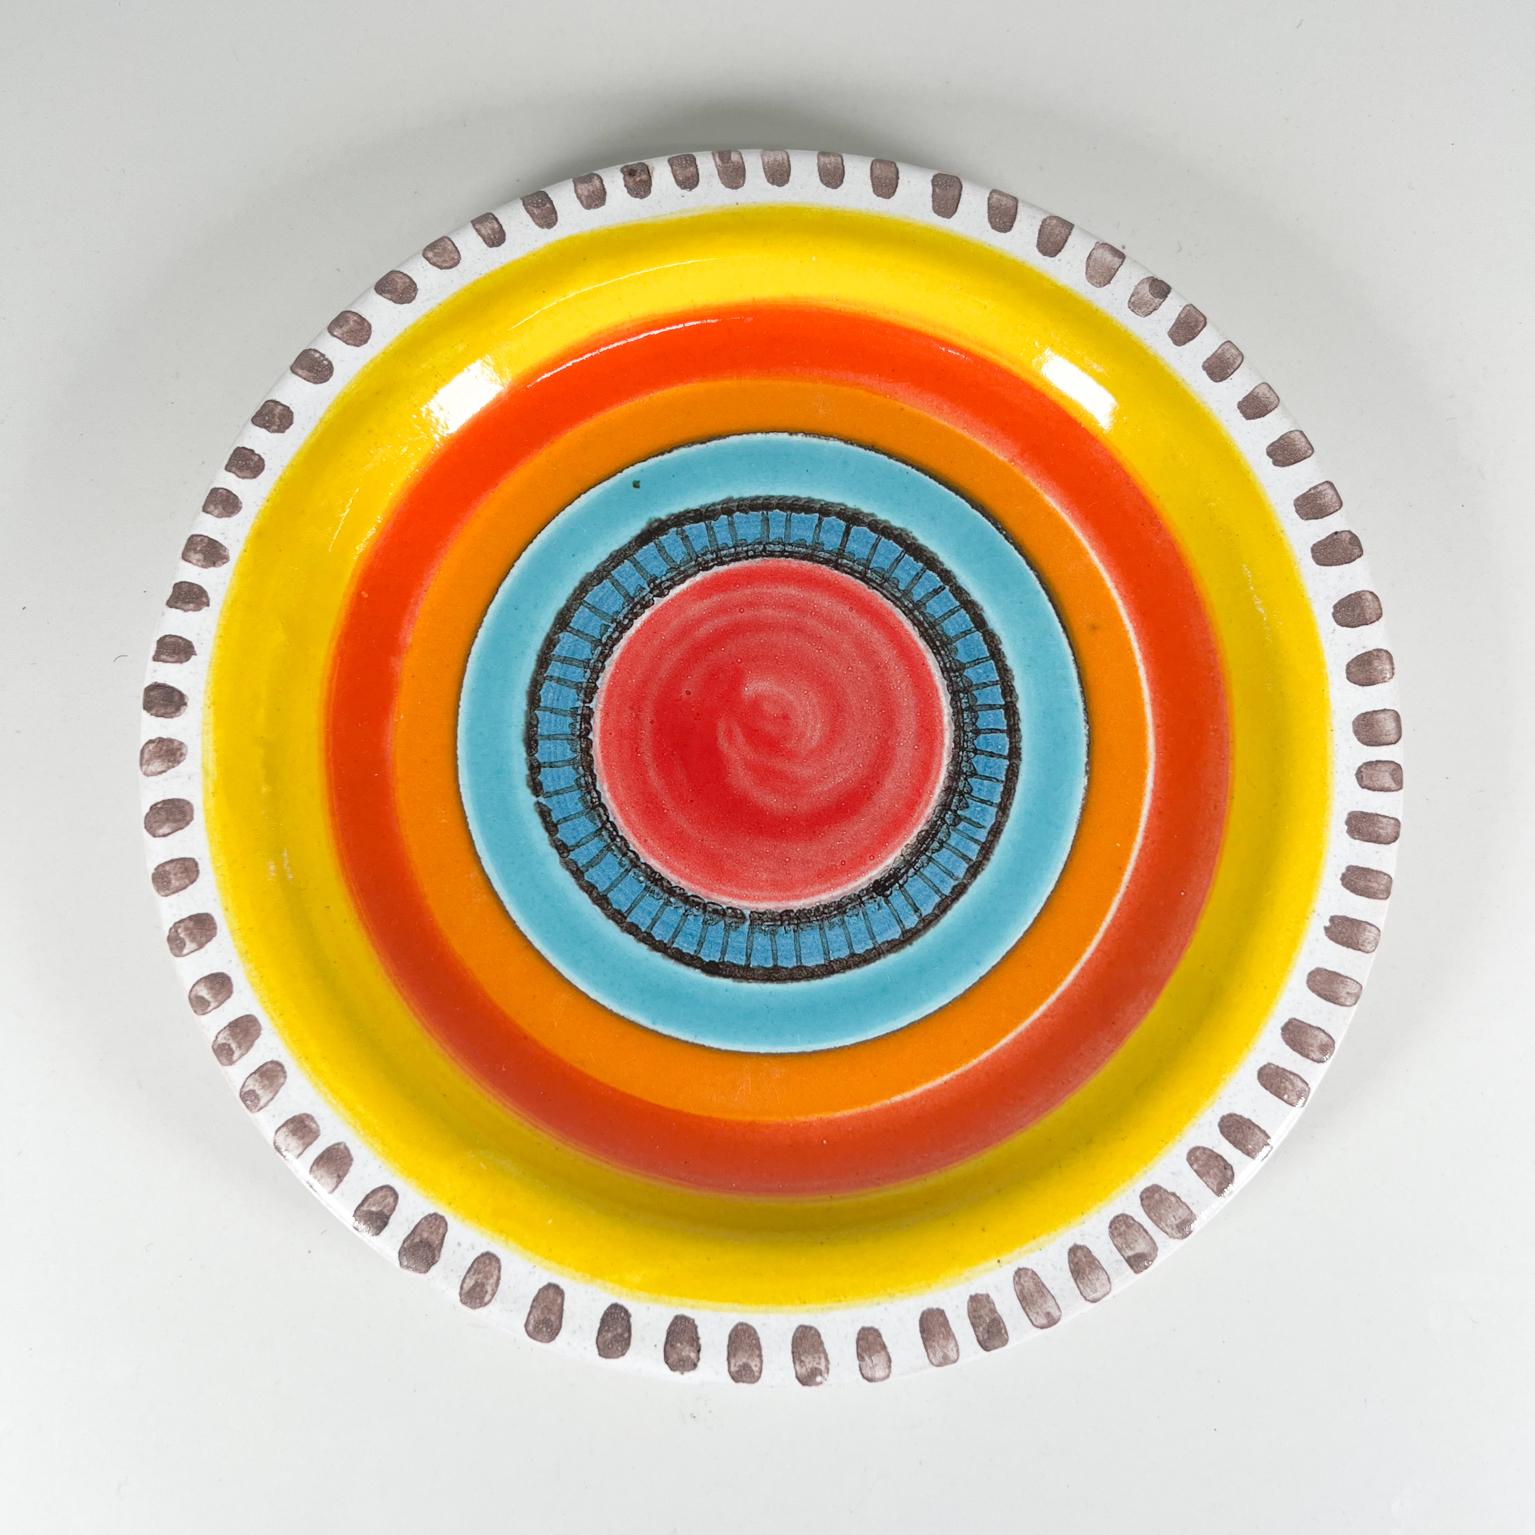 DeSimone Pottery of Italy, lebhafte Keramik-Kunstteller, handbemalt, 1960er Jahre (Moderne der Mitte des Jahrhunderts)